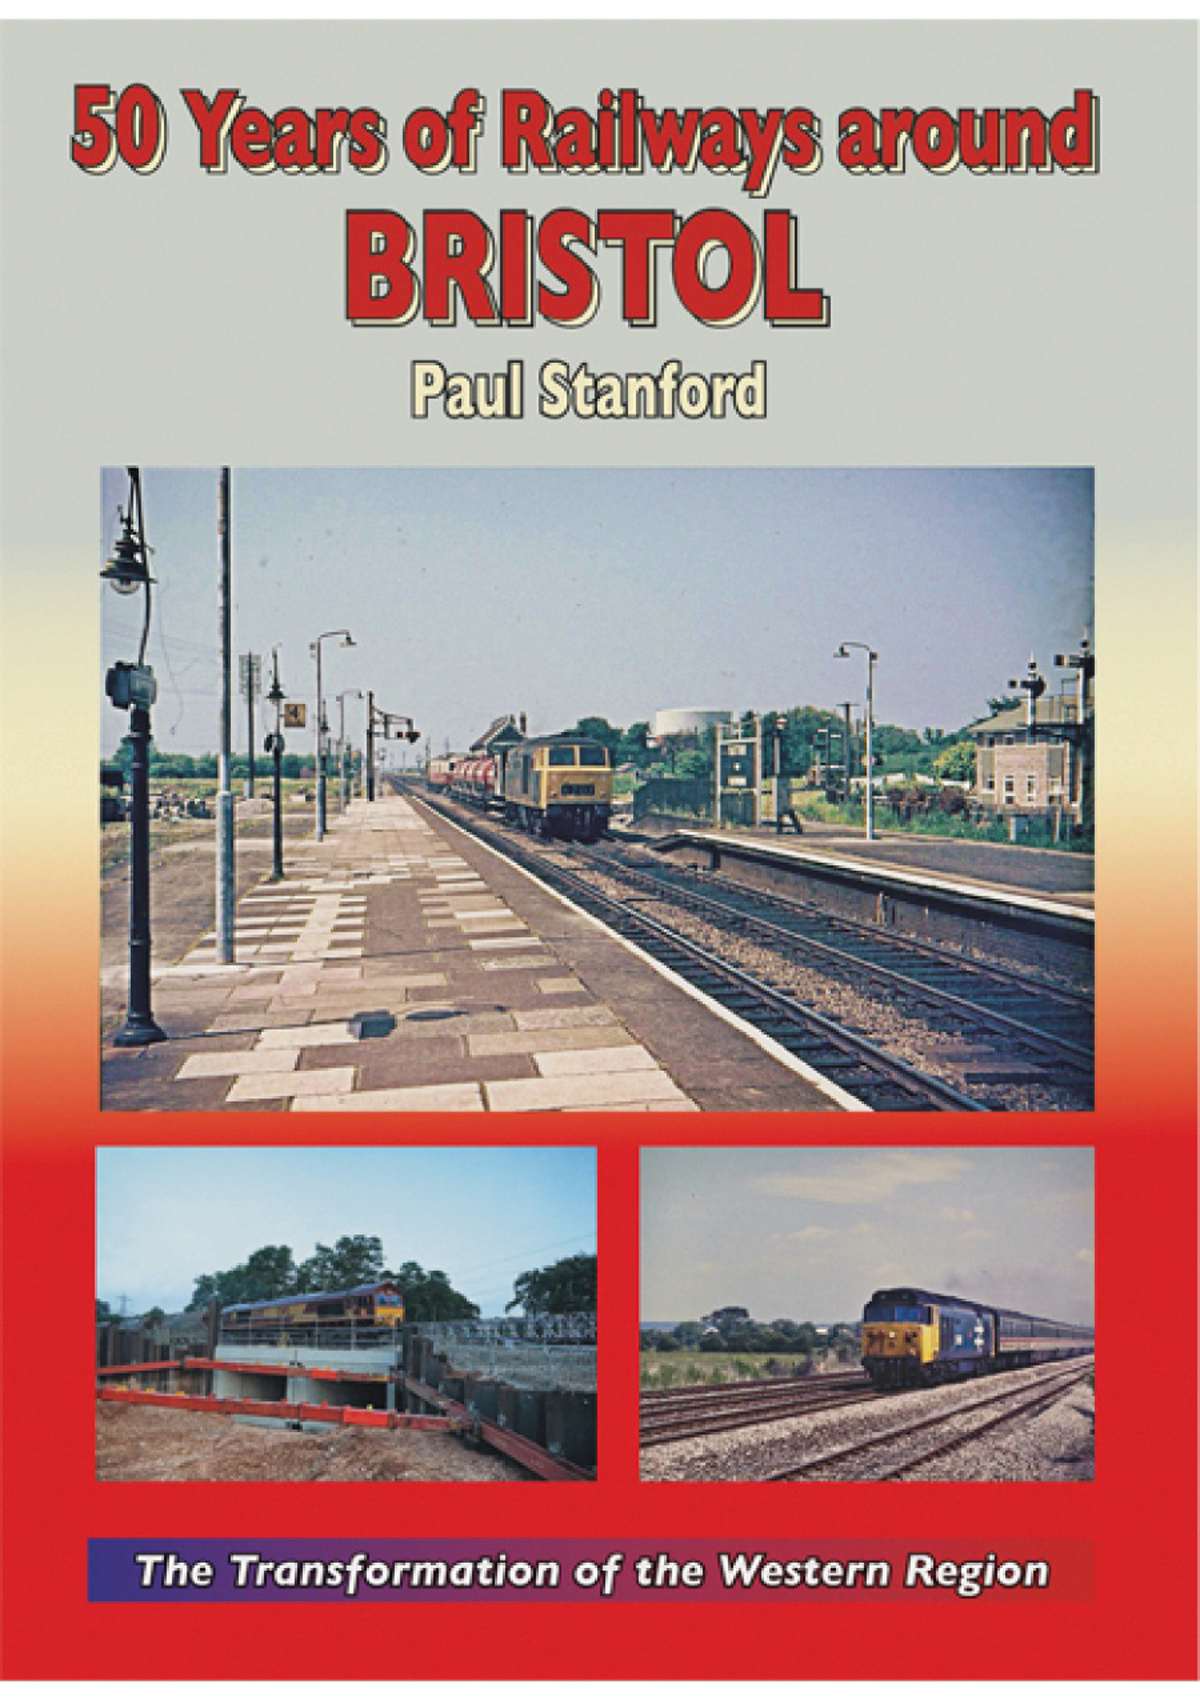 5669 - 50 Years of Railways around Bristol